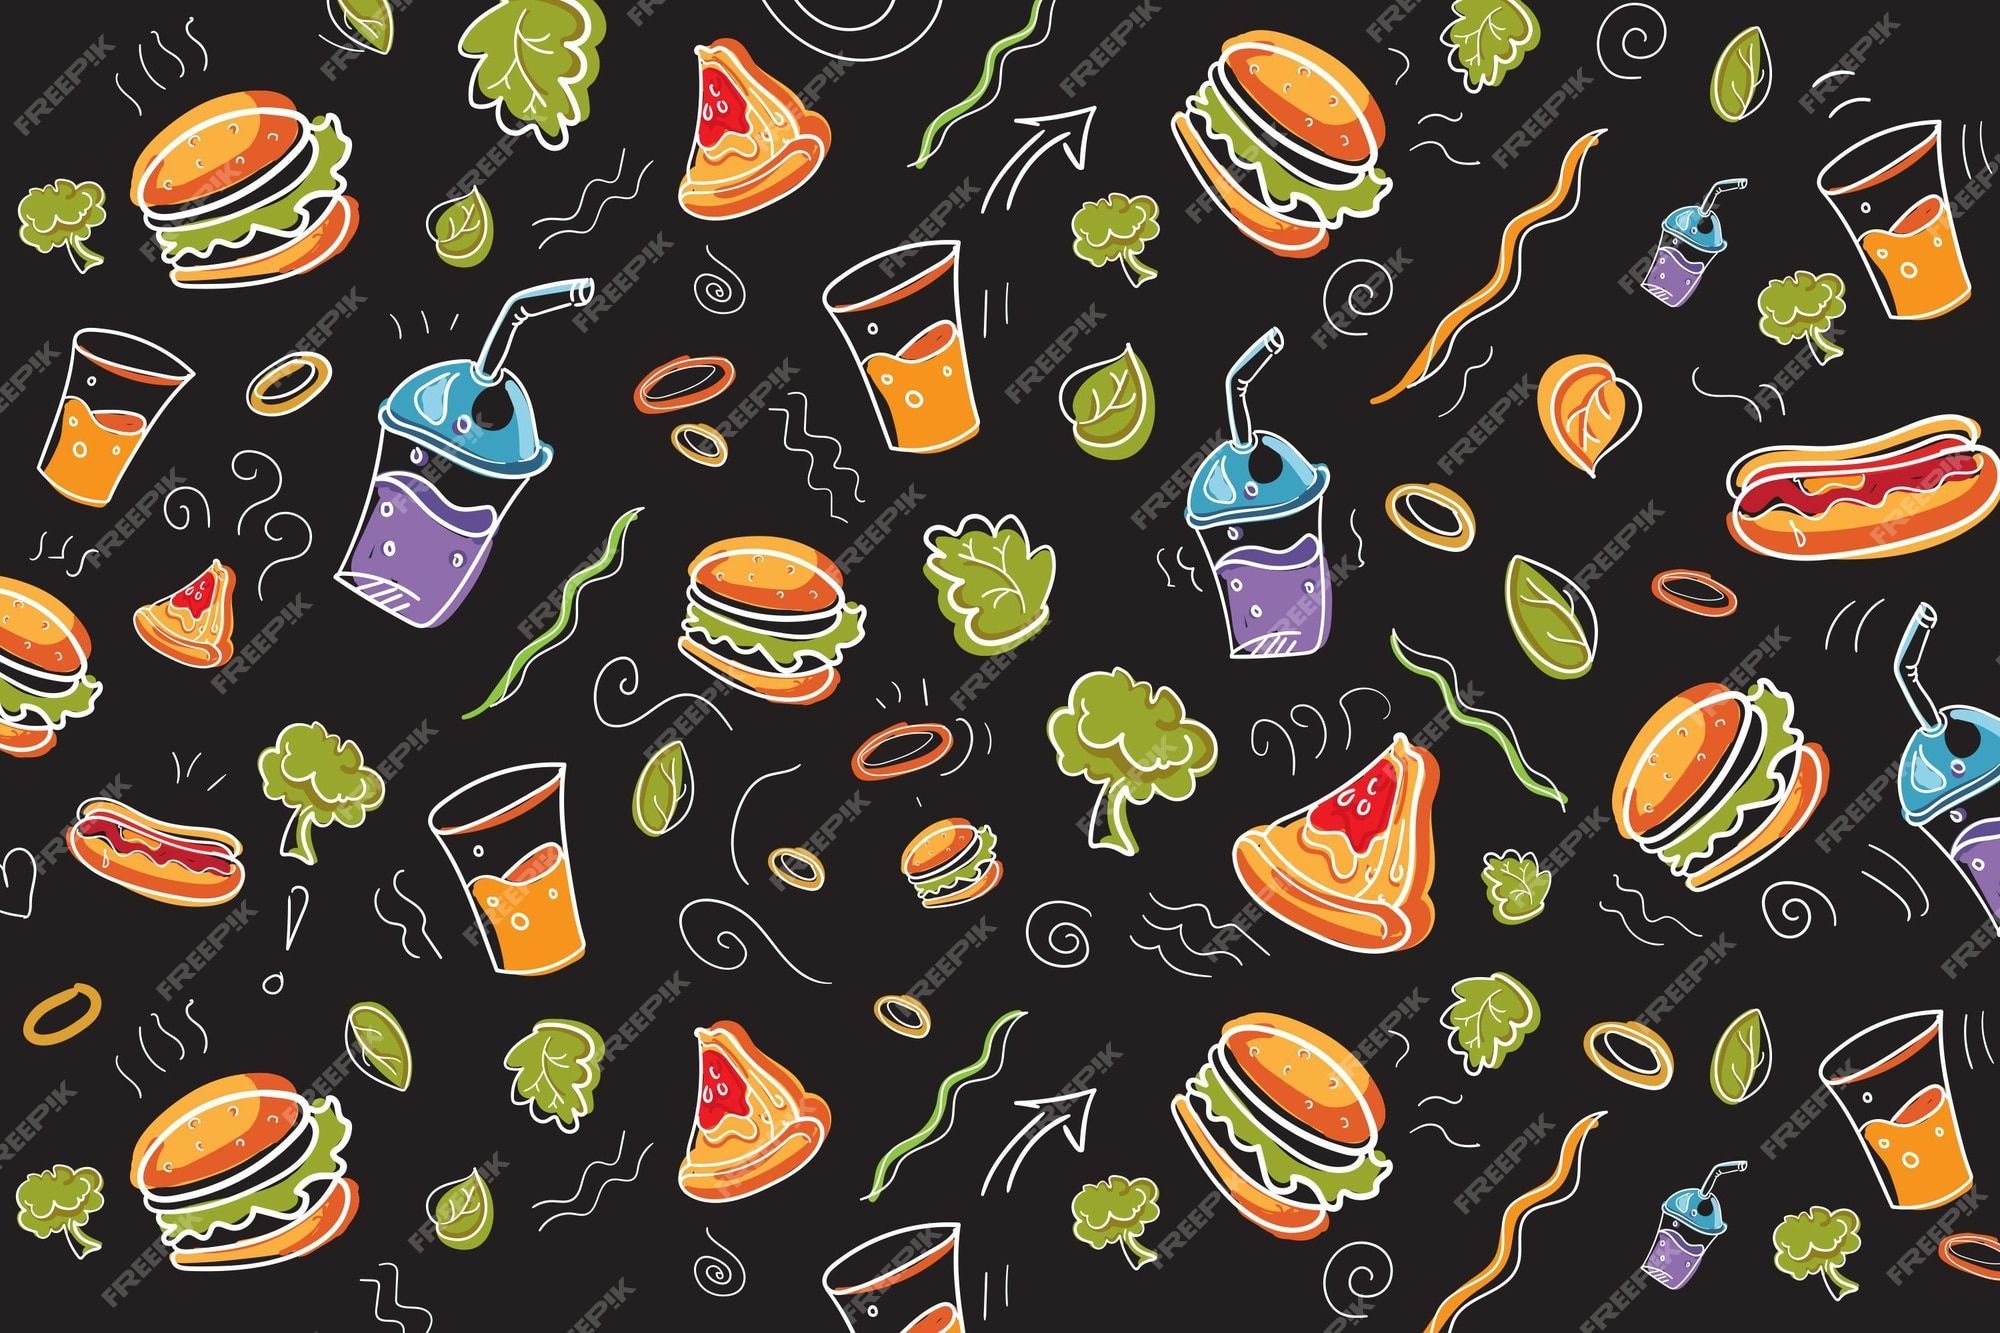 Food Wallpaper Image